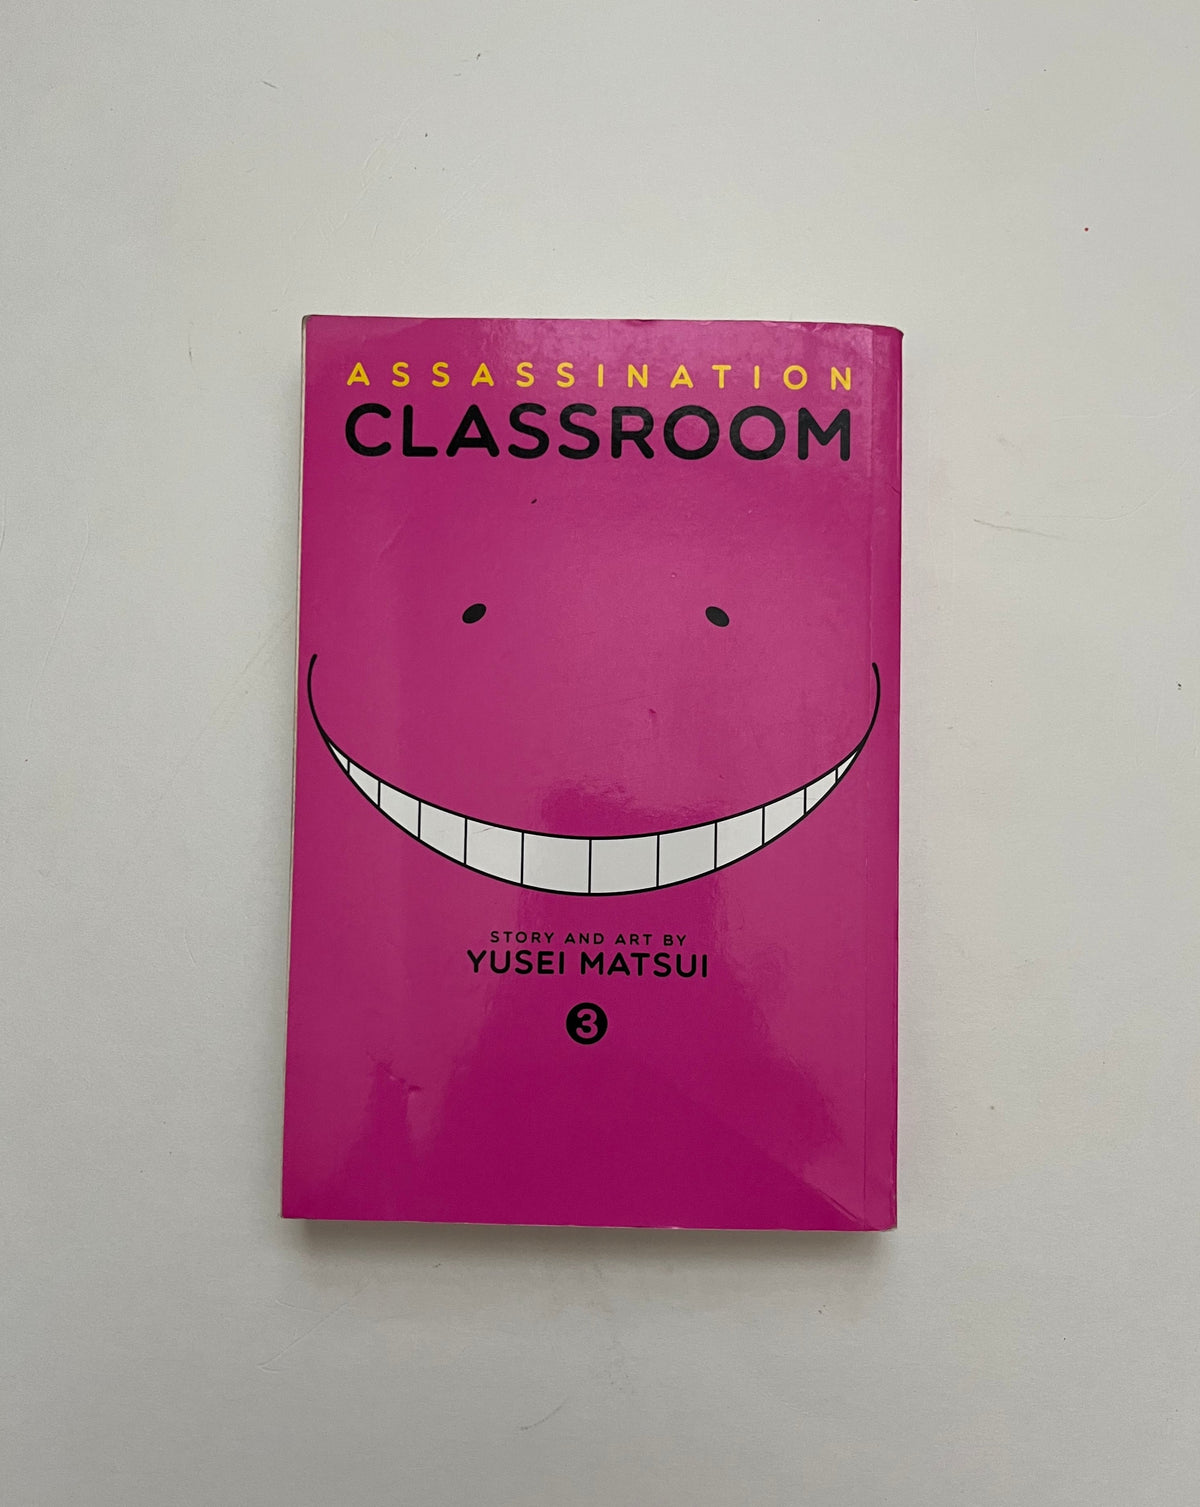 Assassination Classroom 3 by Yusei Matsui